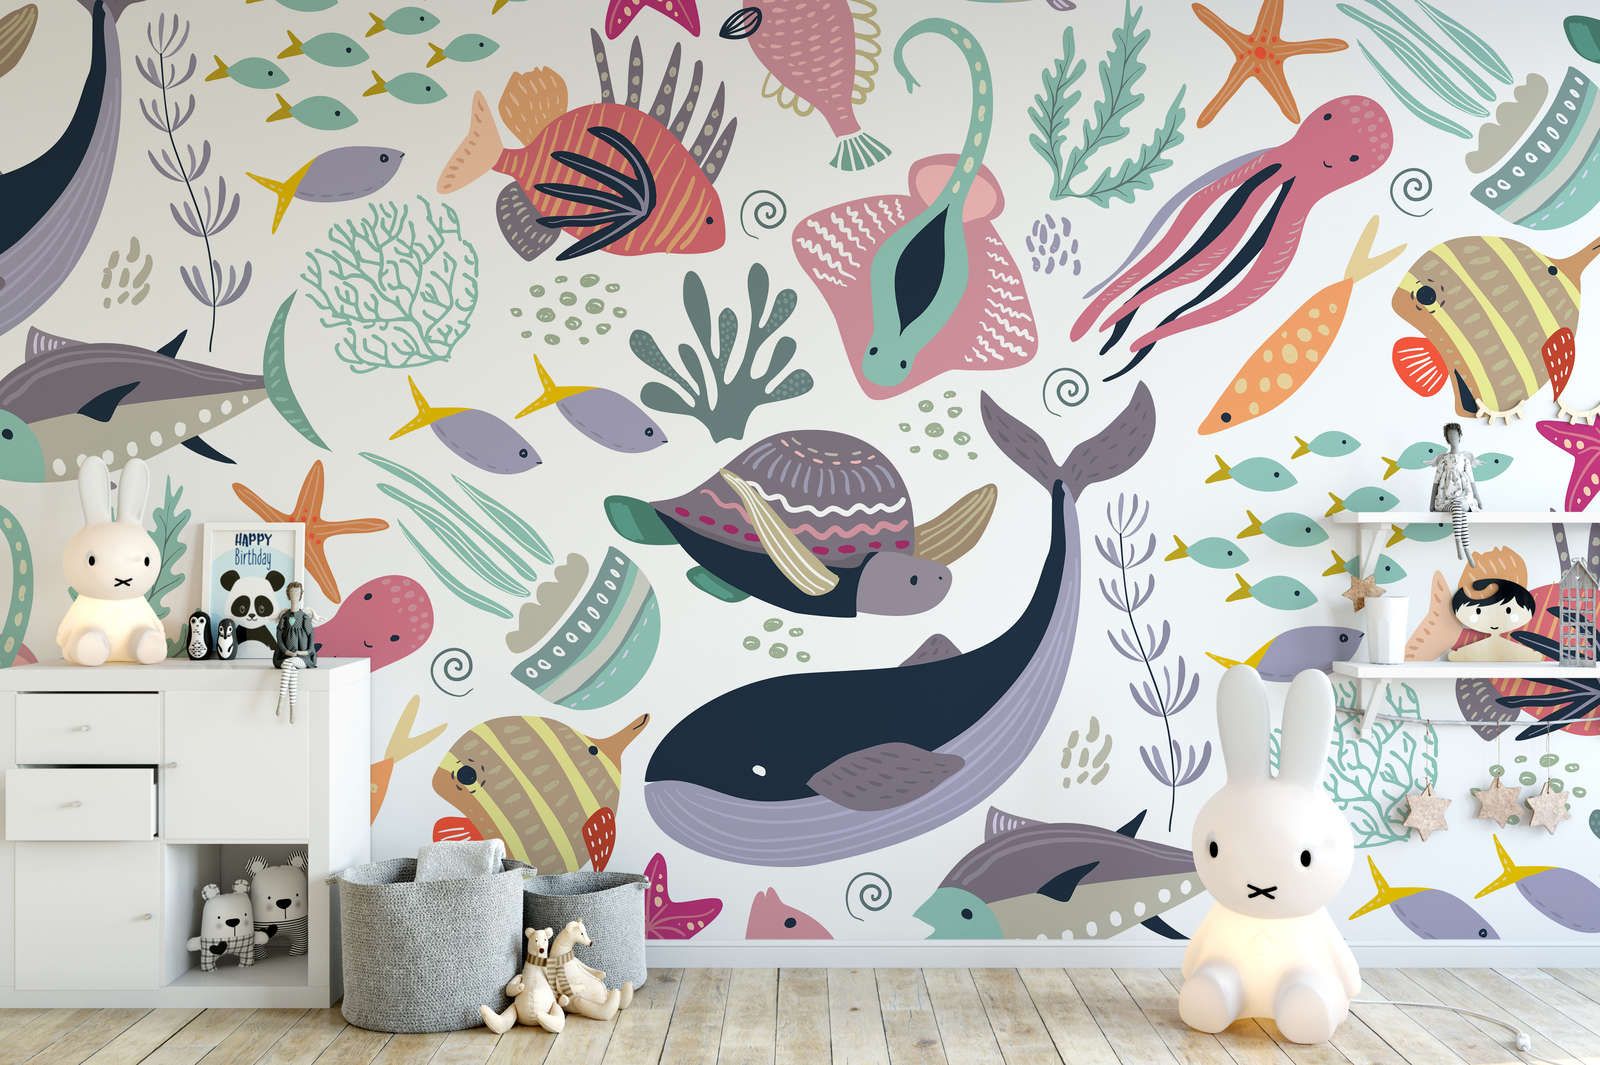             Nursery mural with underwater animals - textured non-woven
        